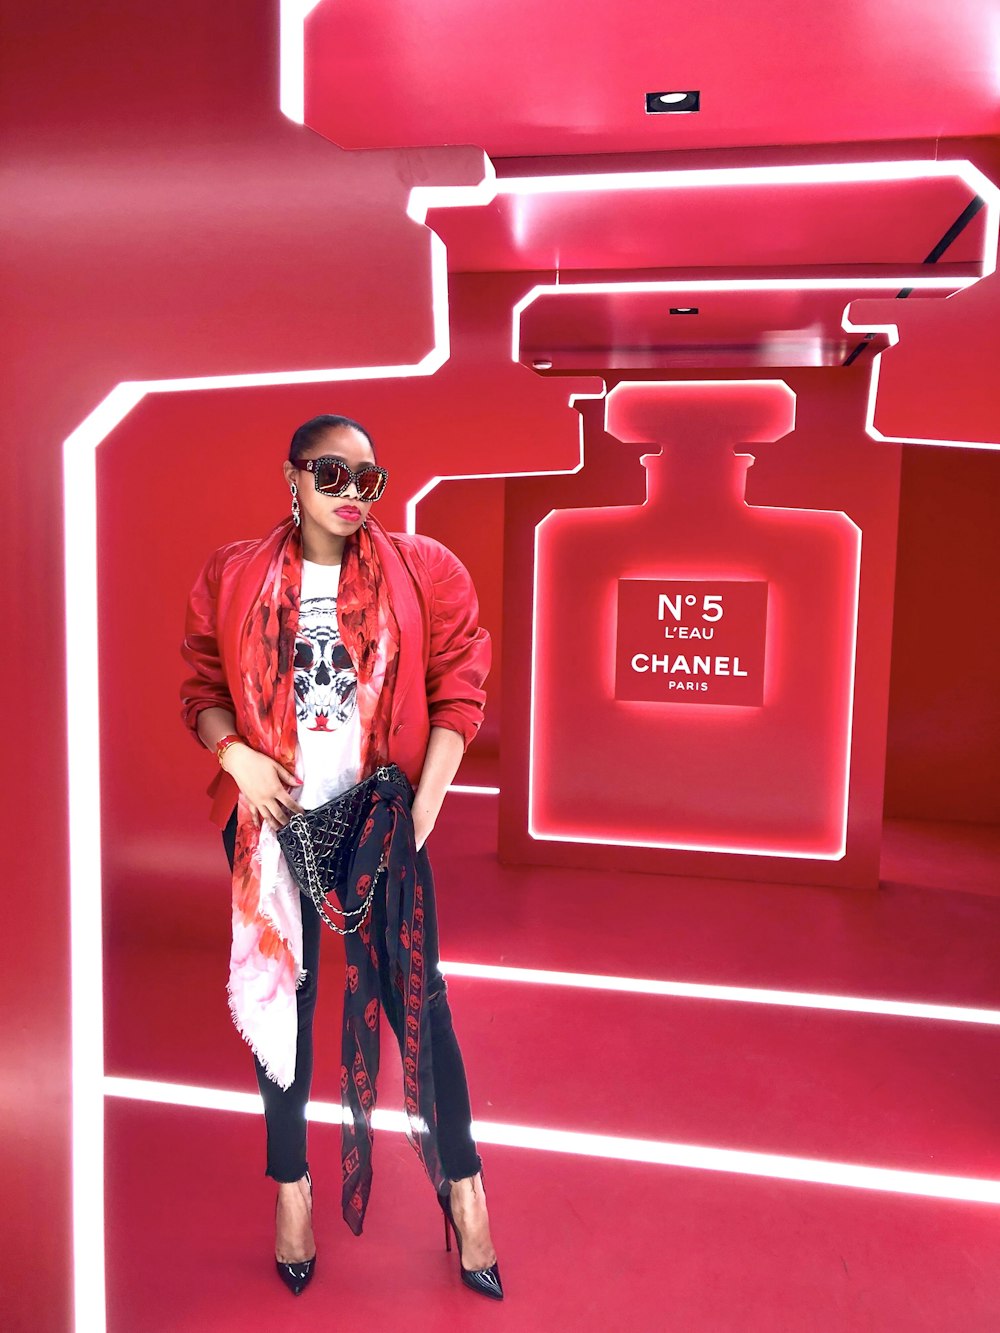 Chanel N5 fragrance bottle advertisement